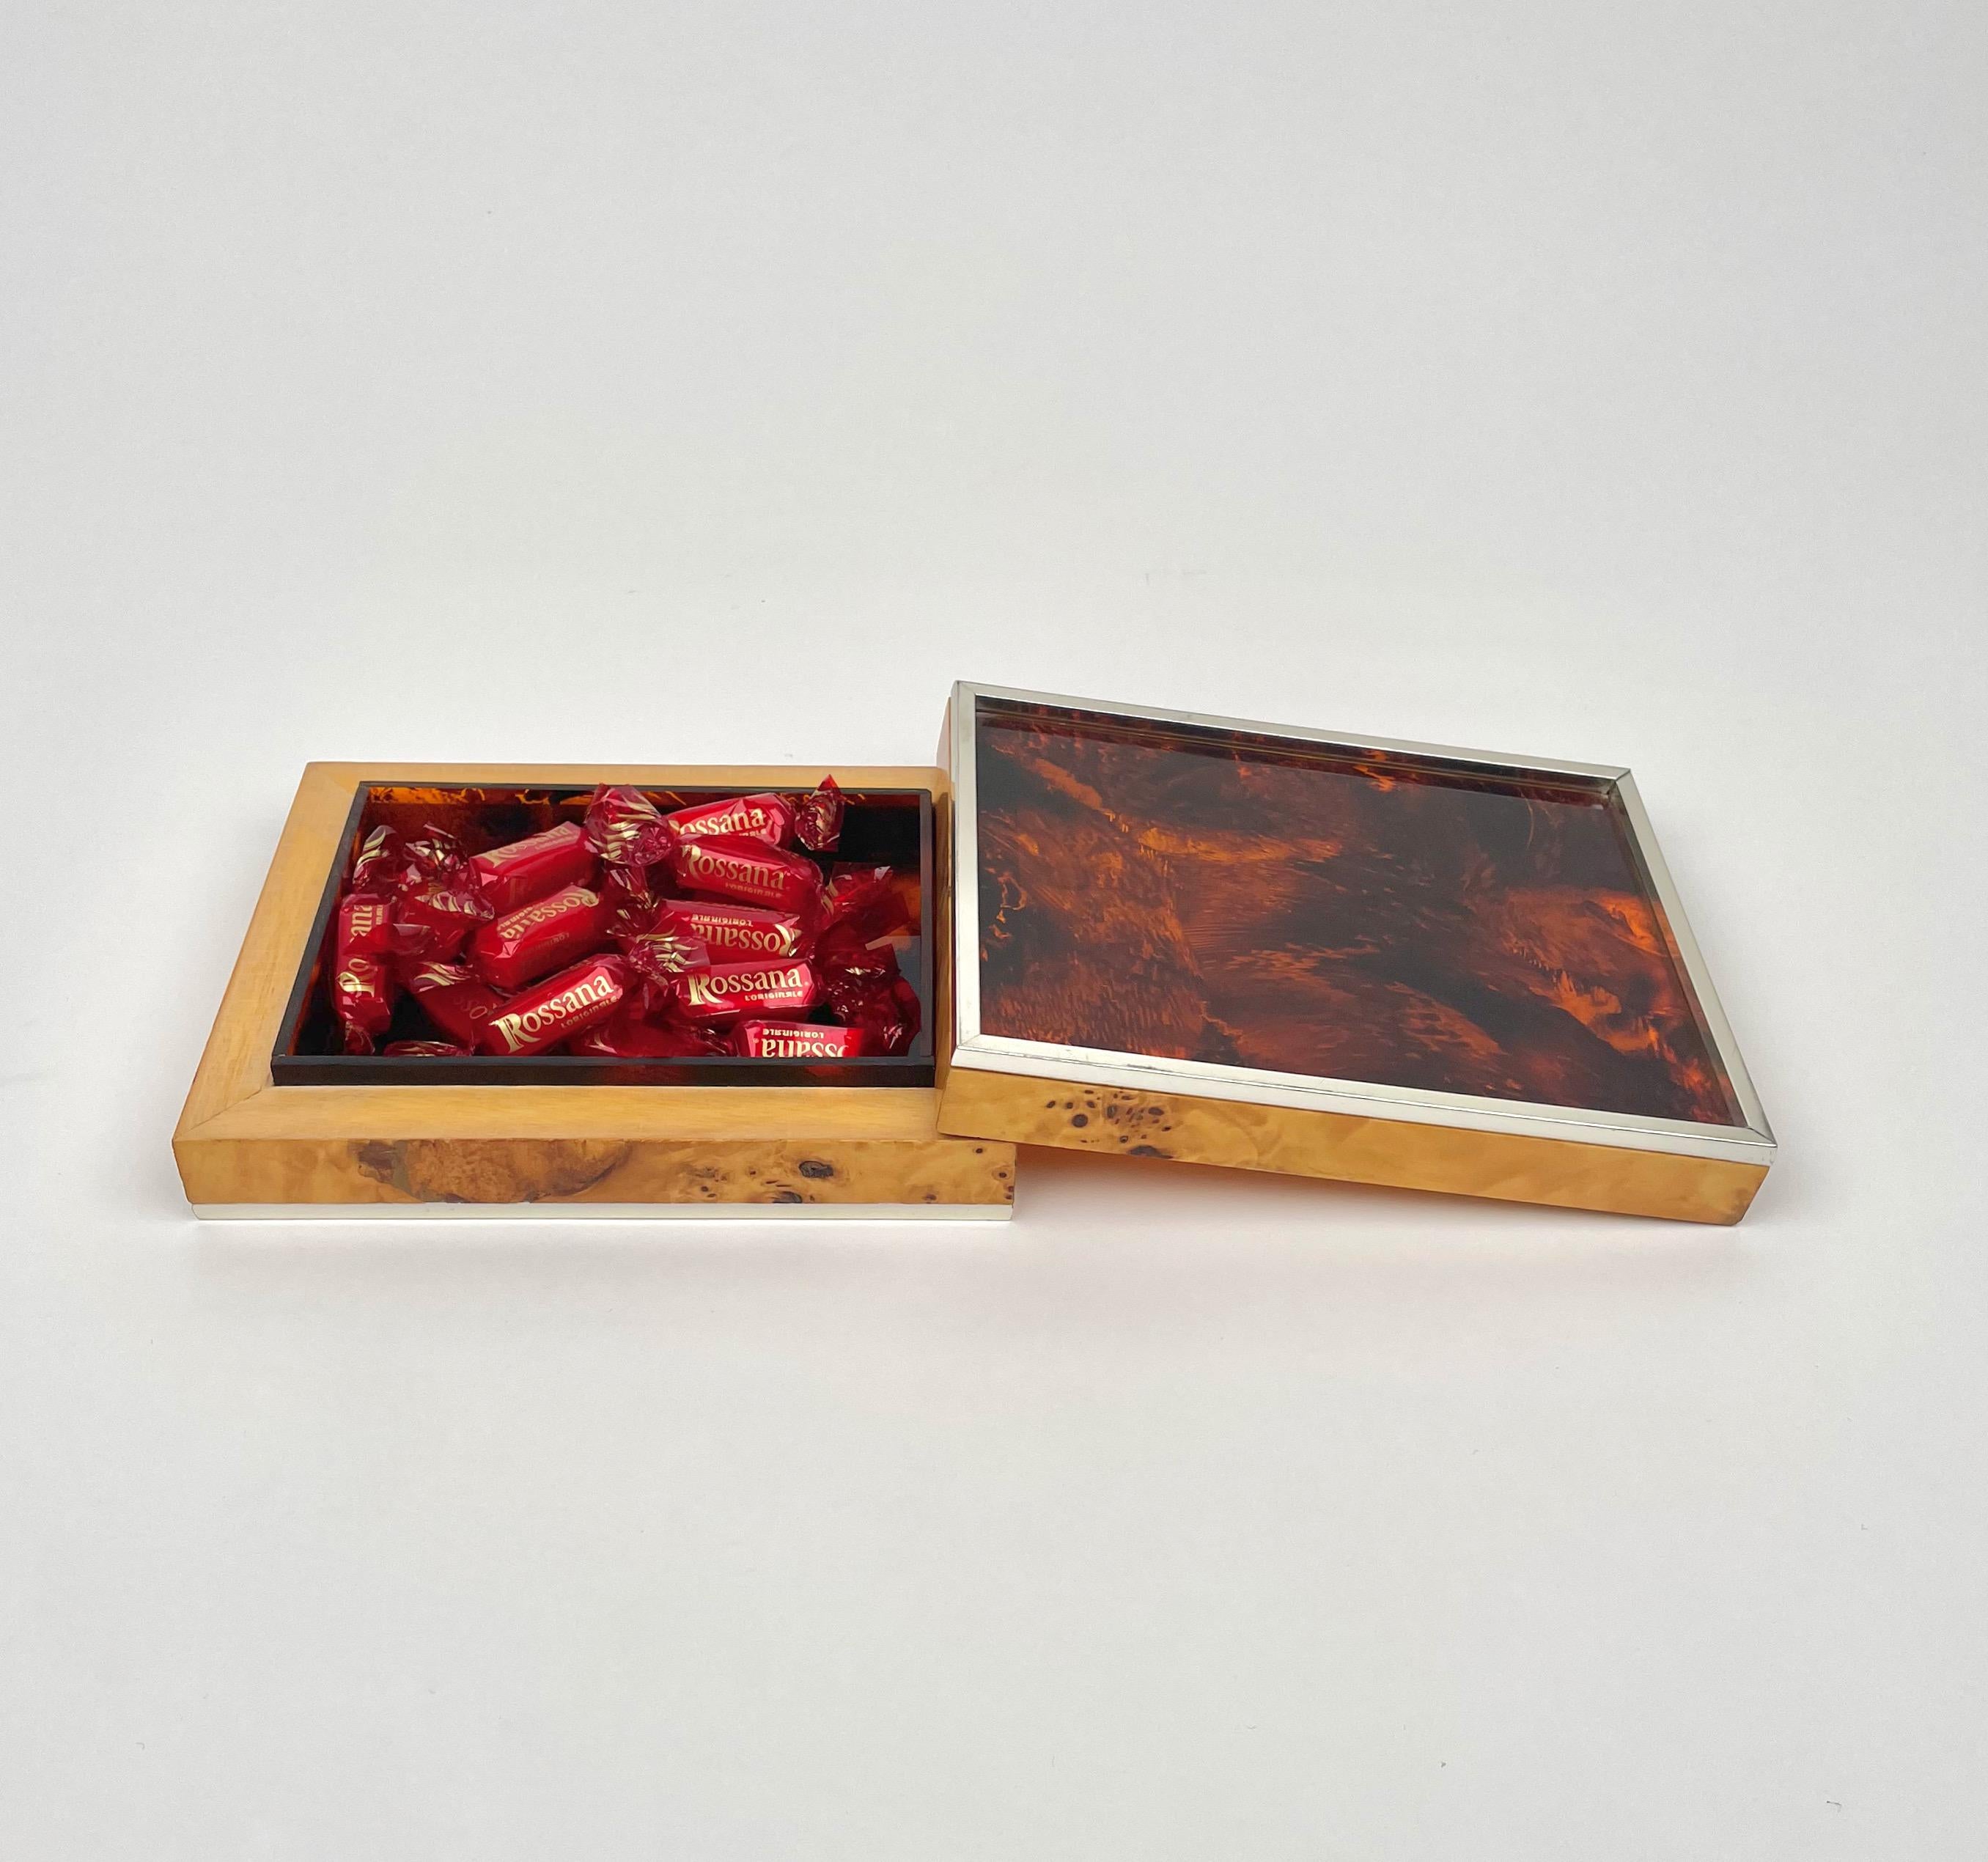 Burl Wood & Tortoiseshell Effect Lucite Box, Italy, 1970s For Sale 2